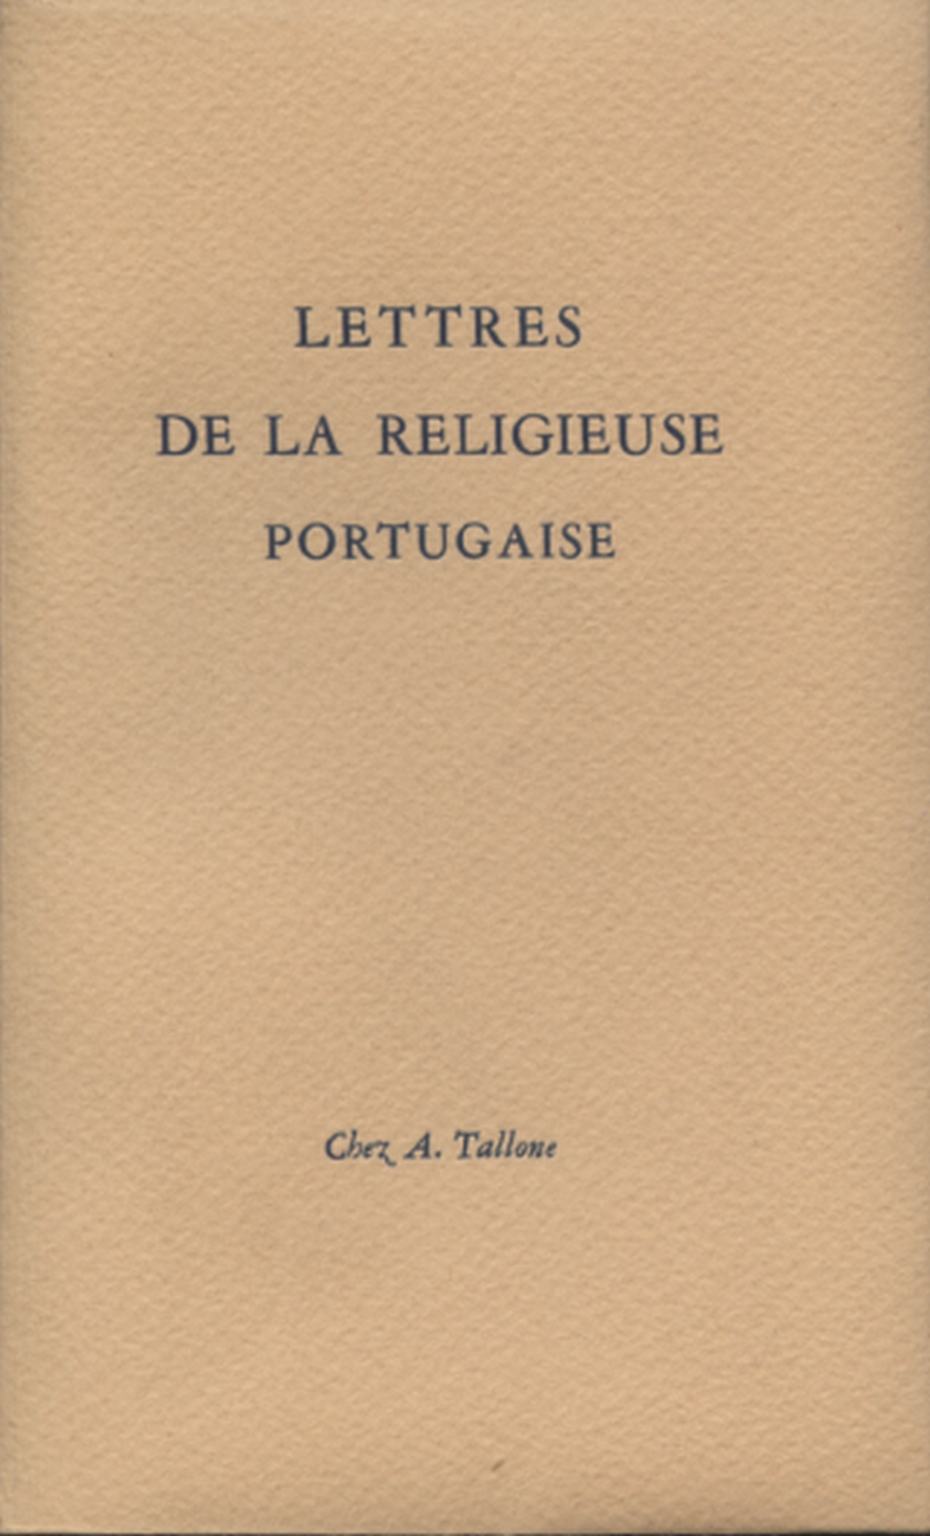 Lettres de la religieuse portugaise, s.una.